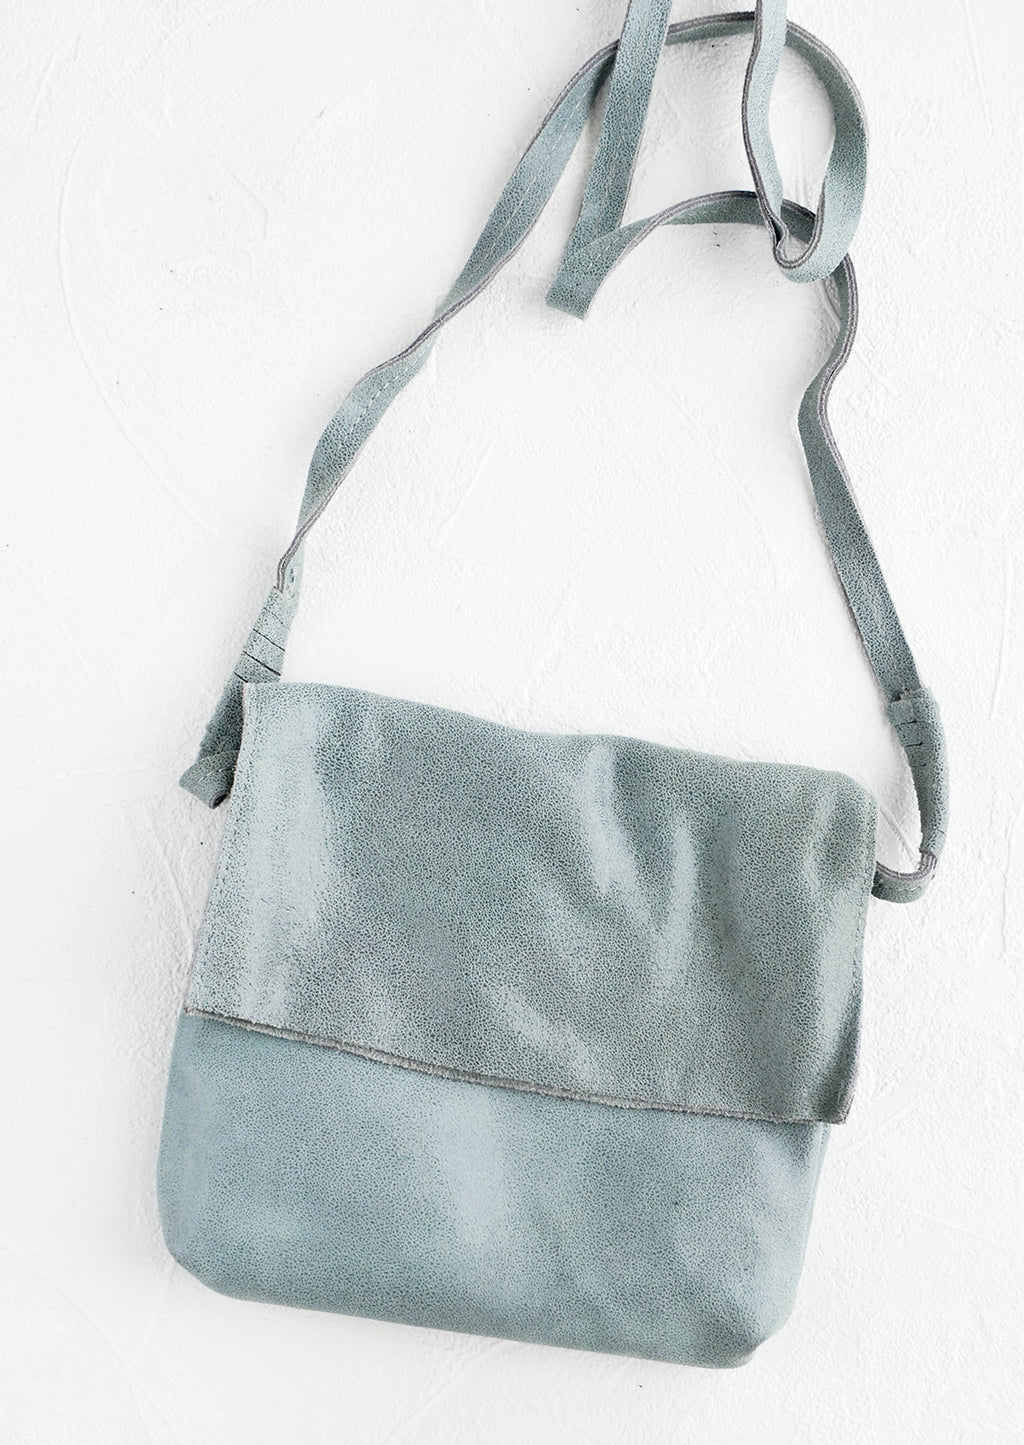 Storm Cloud: Shimmer Leather Crossbody Bag